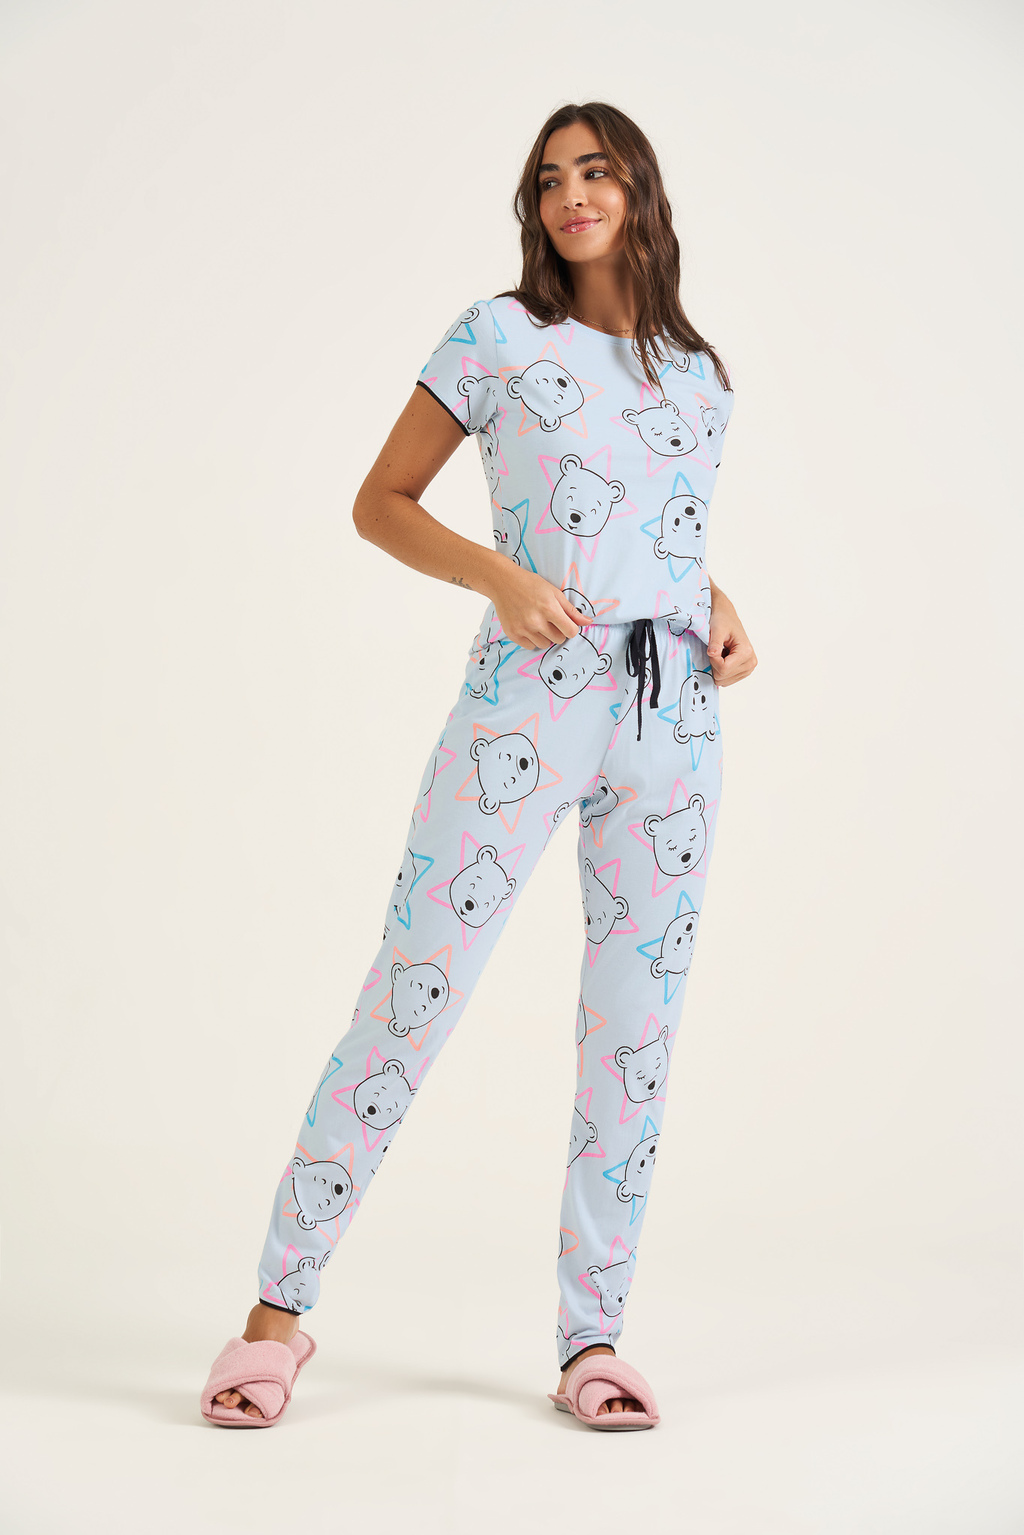 Pijama Feminino Manga Curta Calça Comprida Azul Ursos